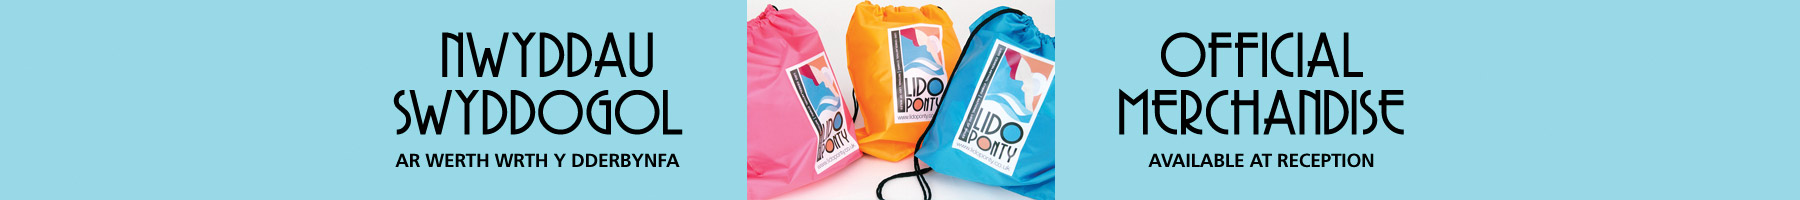 Lido-Merchandise-banner